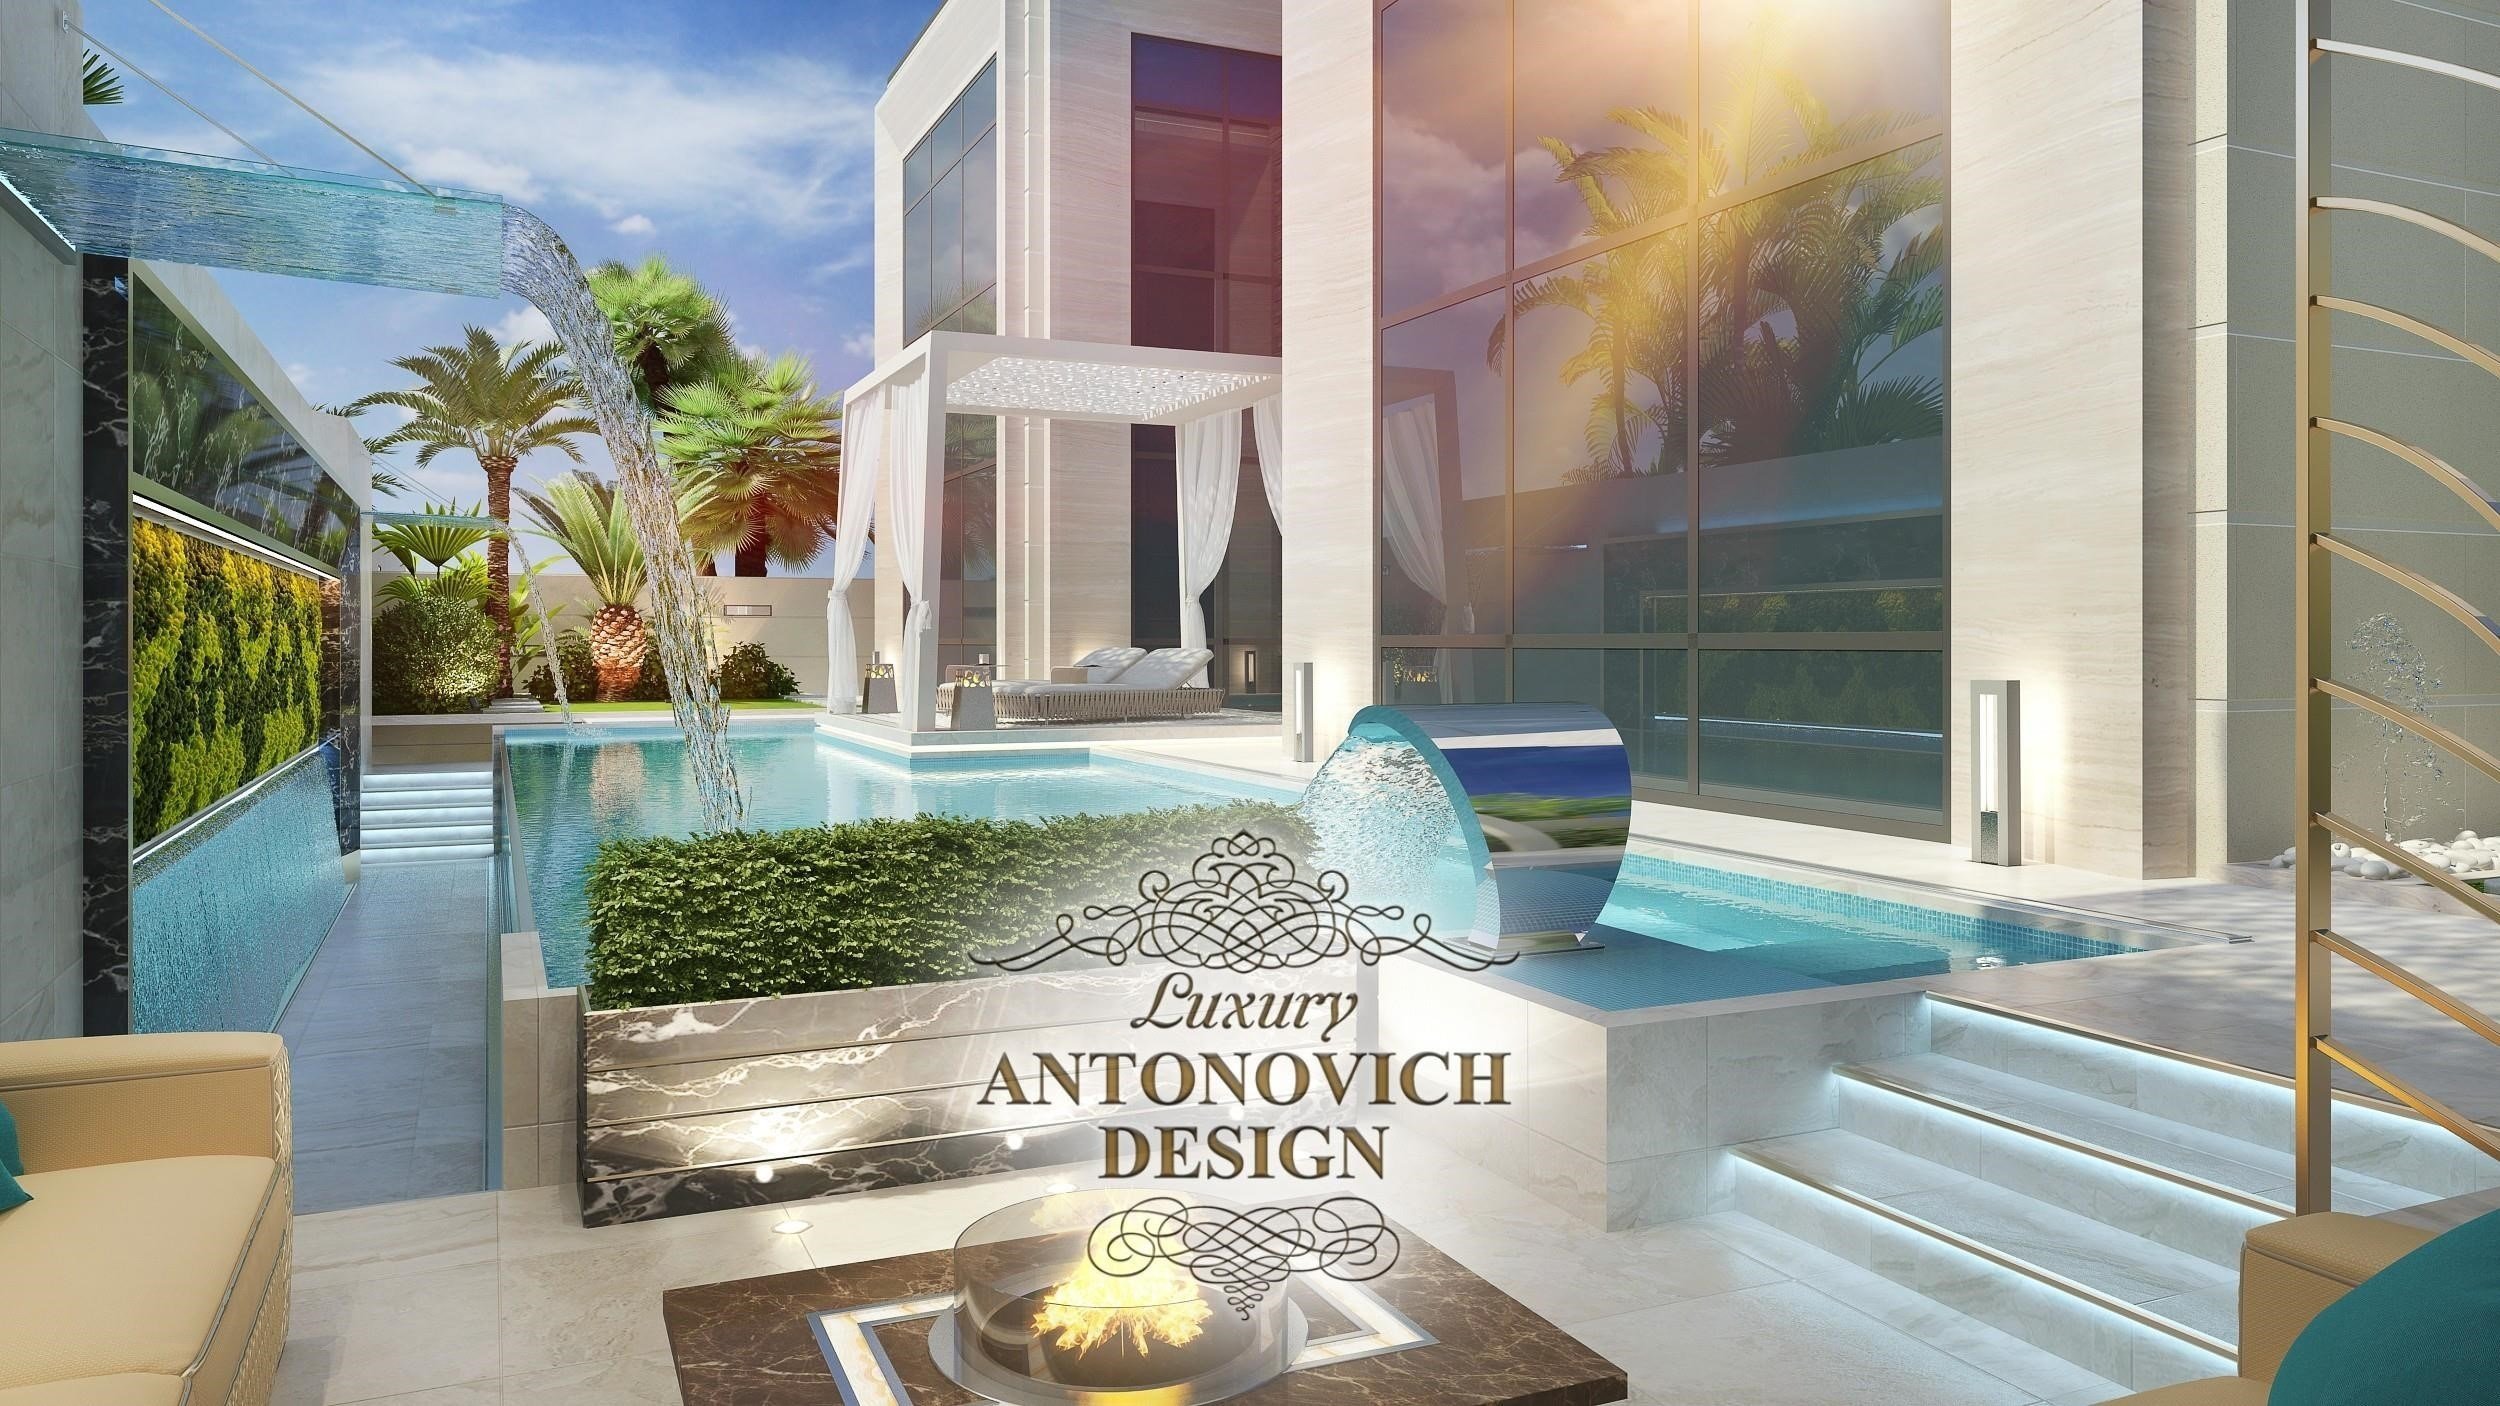 exterior-arxitekturny-proekt-v-stile-bungalo-antonovich-design-4